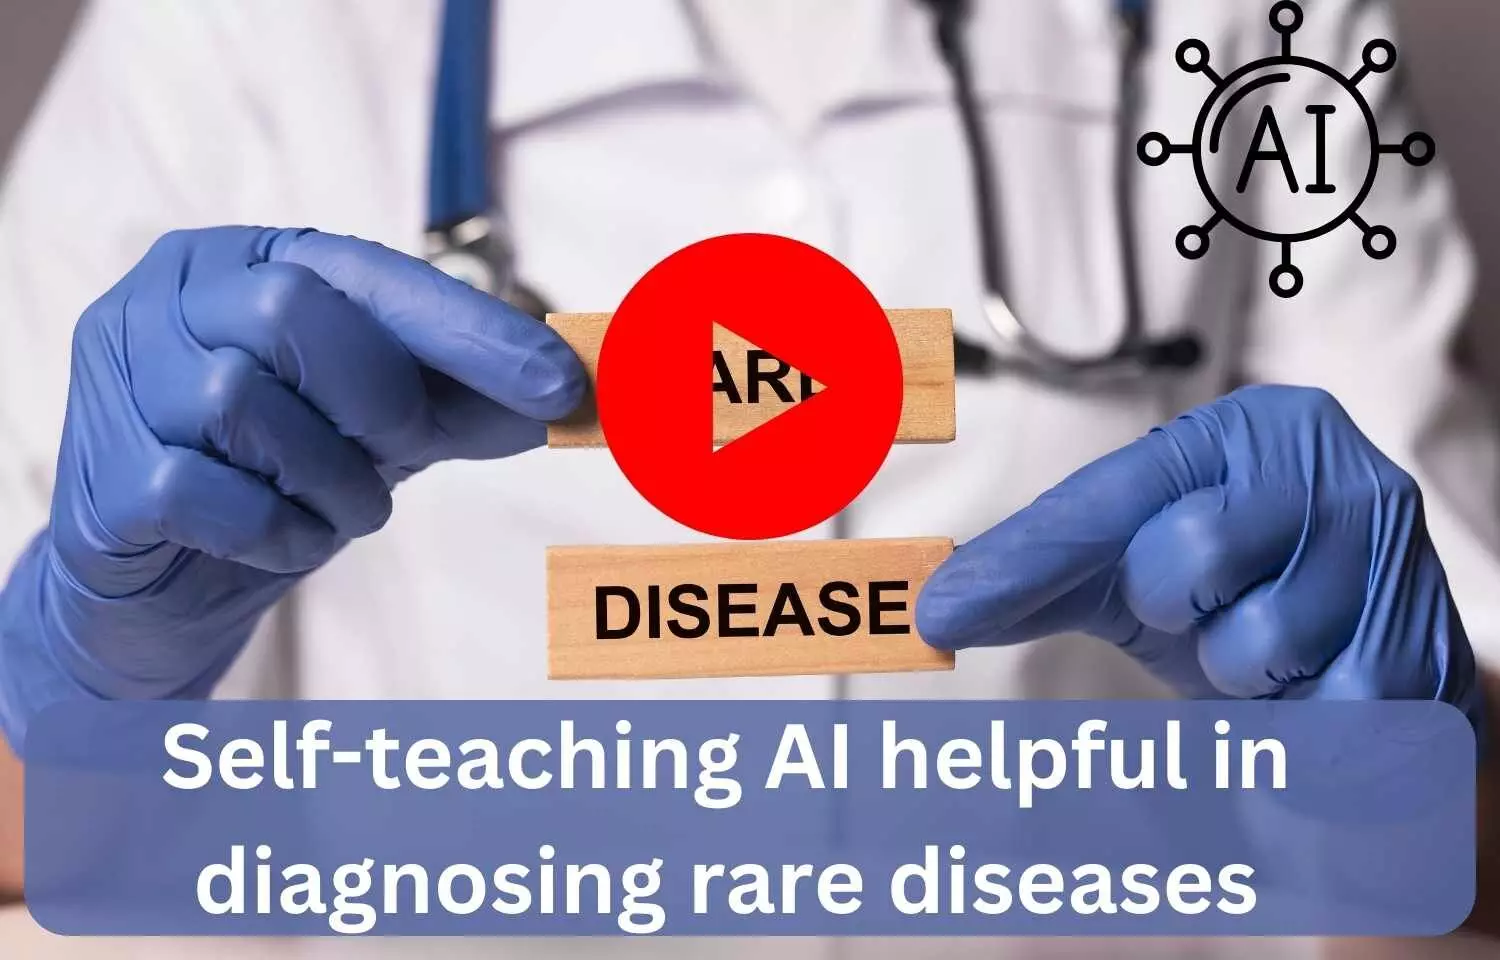 Self-teaching AI helpful in diagnosing rare diseases